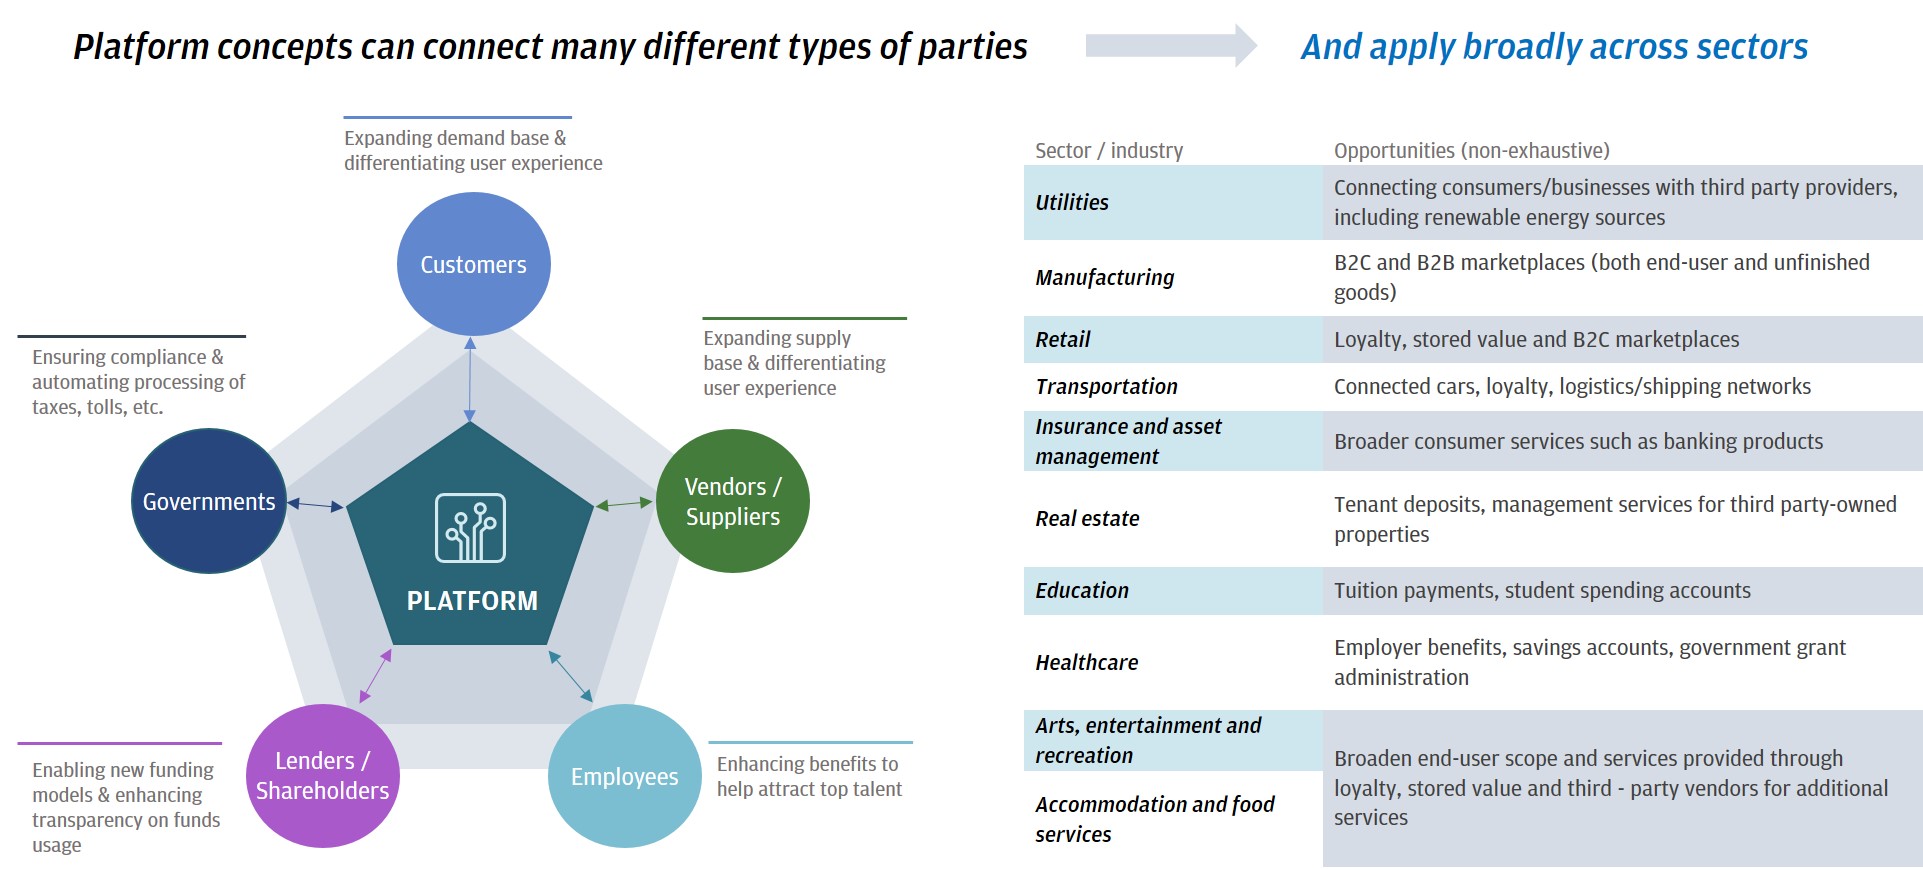  RISE PLATFORMS Exhibit 1 - Platform concepts connect many different types of parties